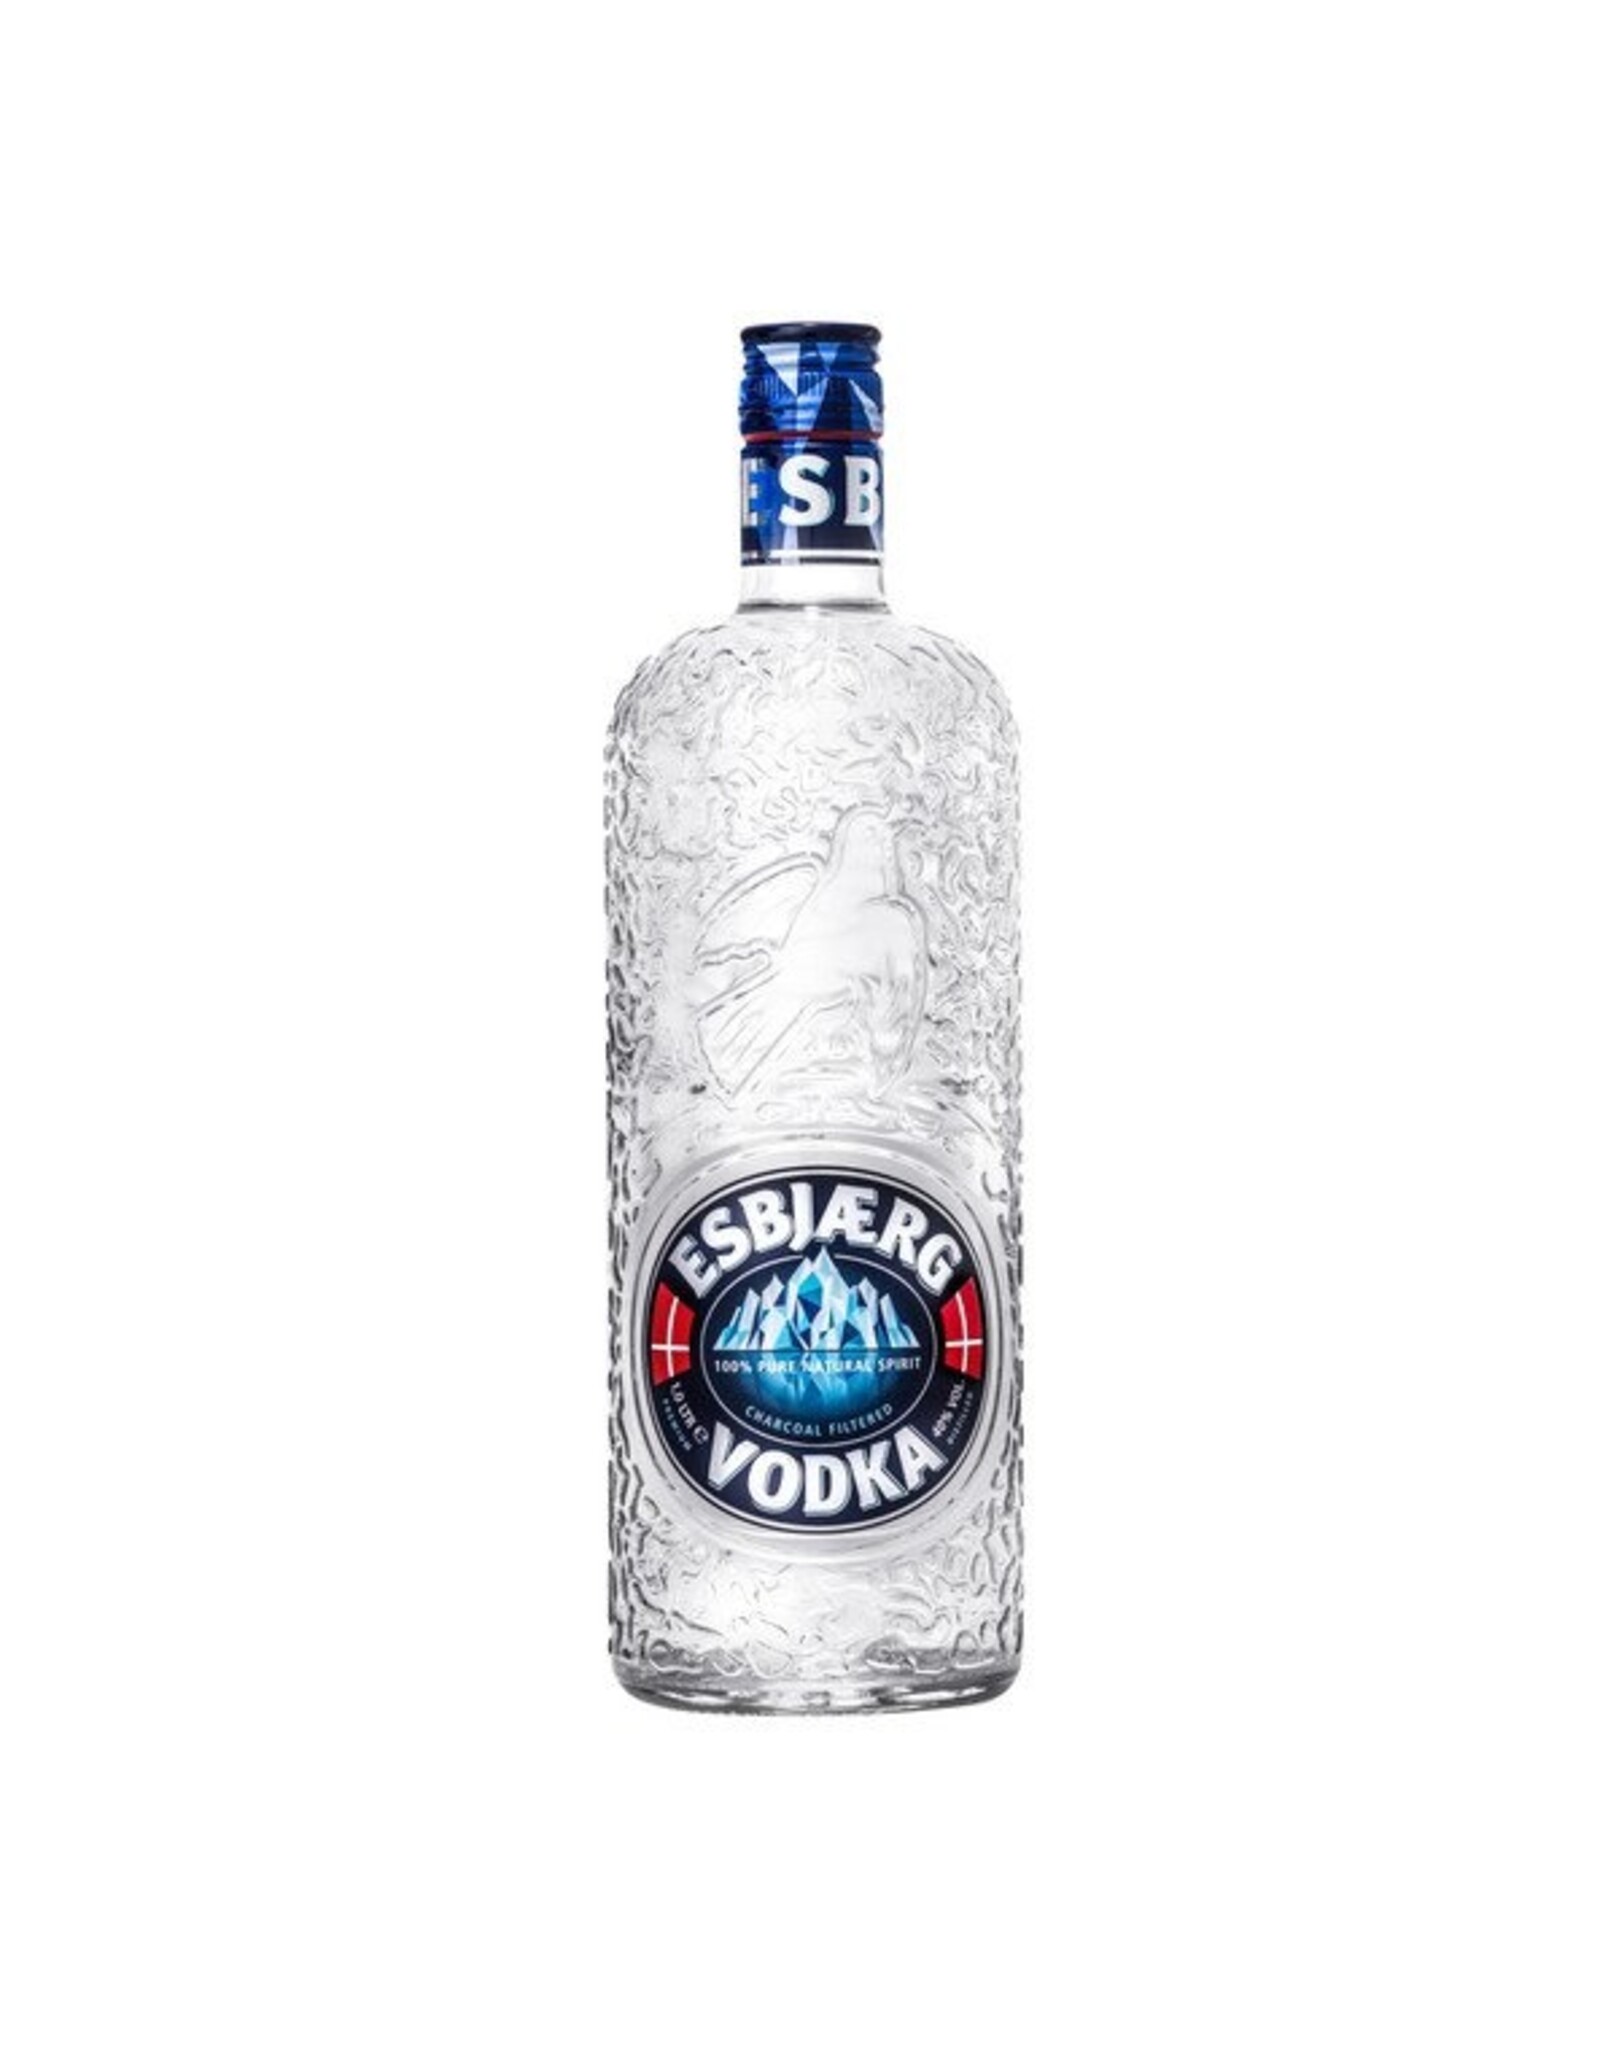 Esbjaerg Vodka 100cl.